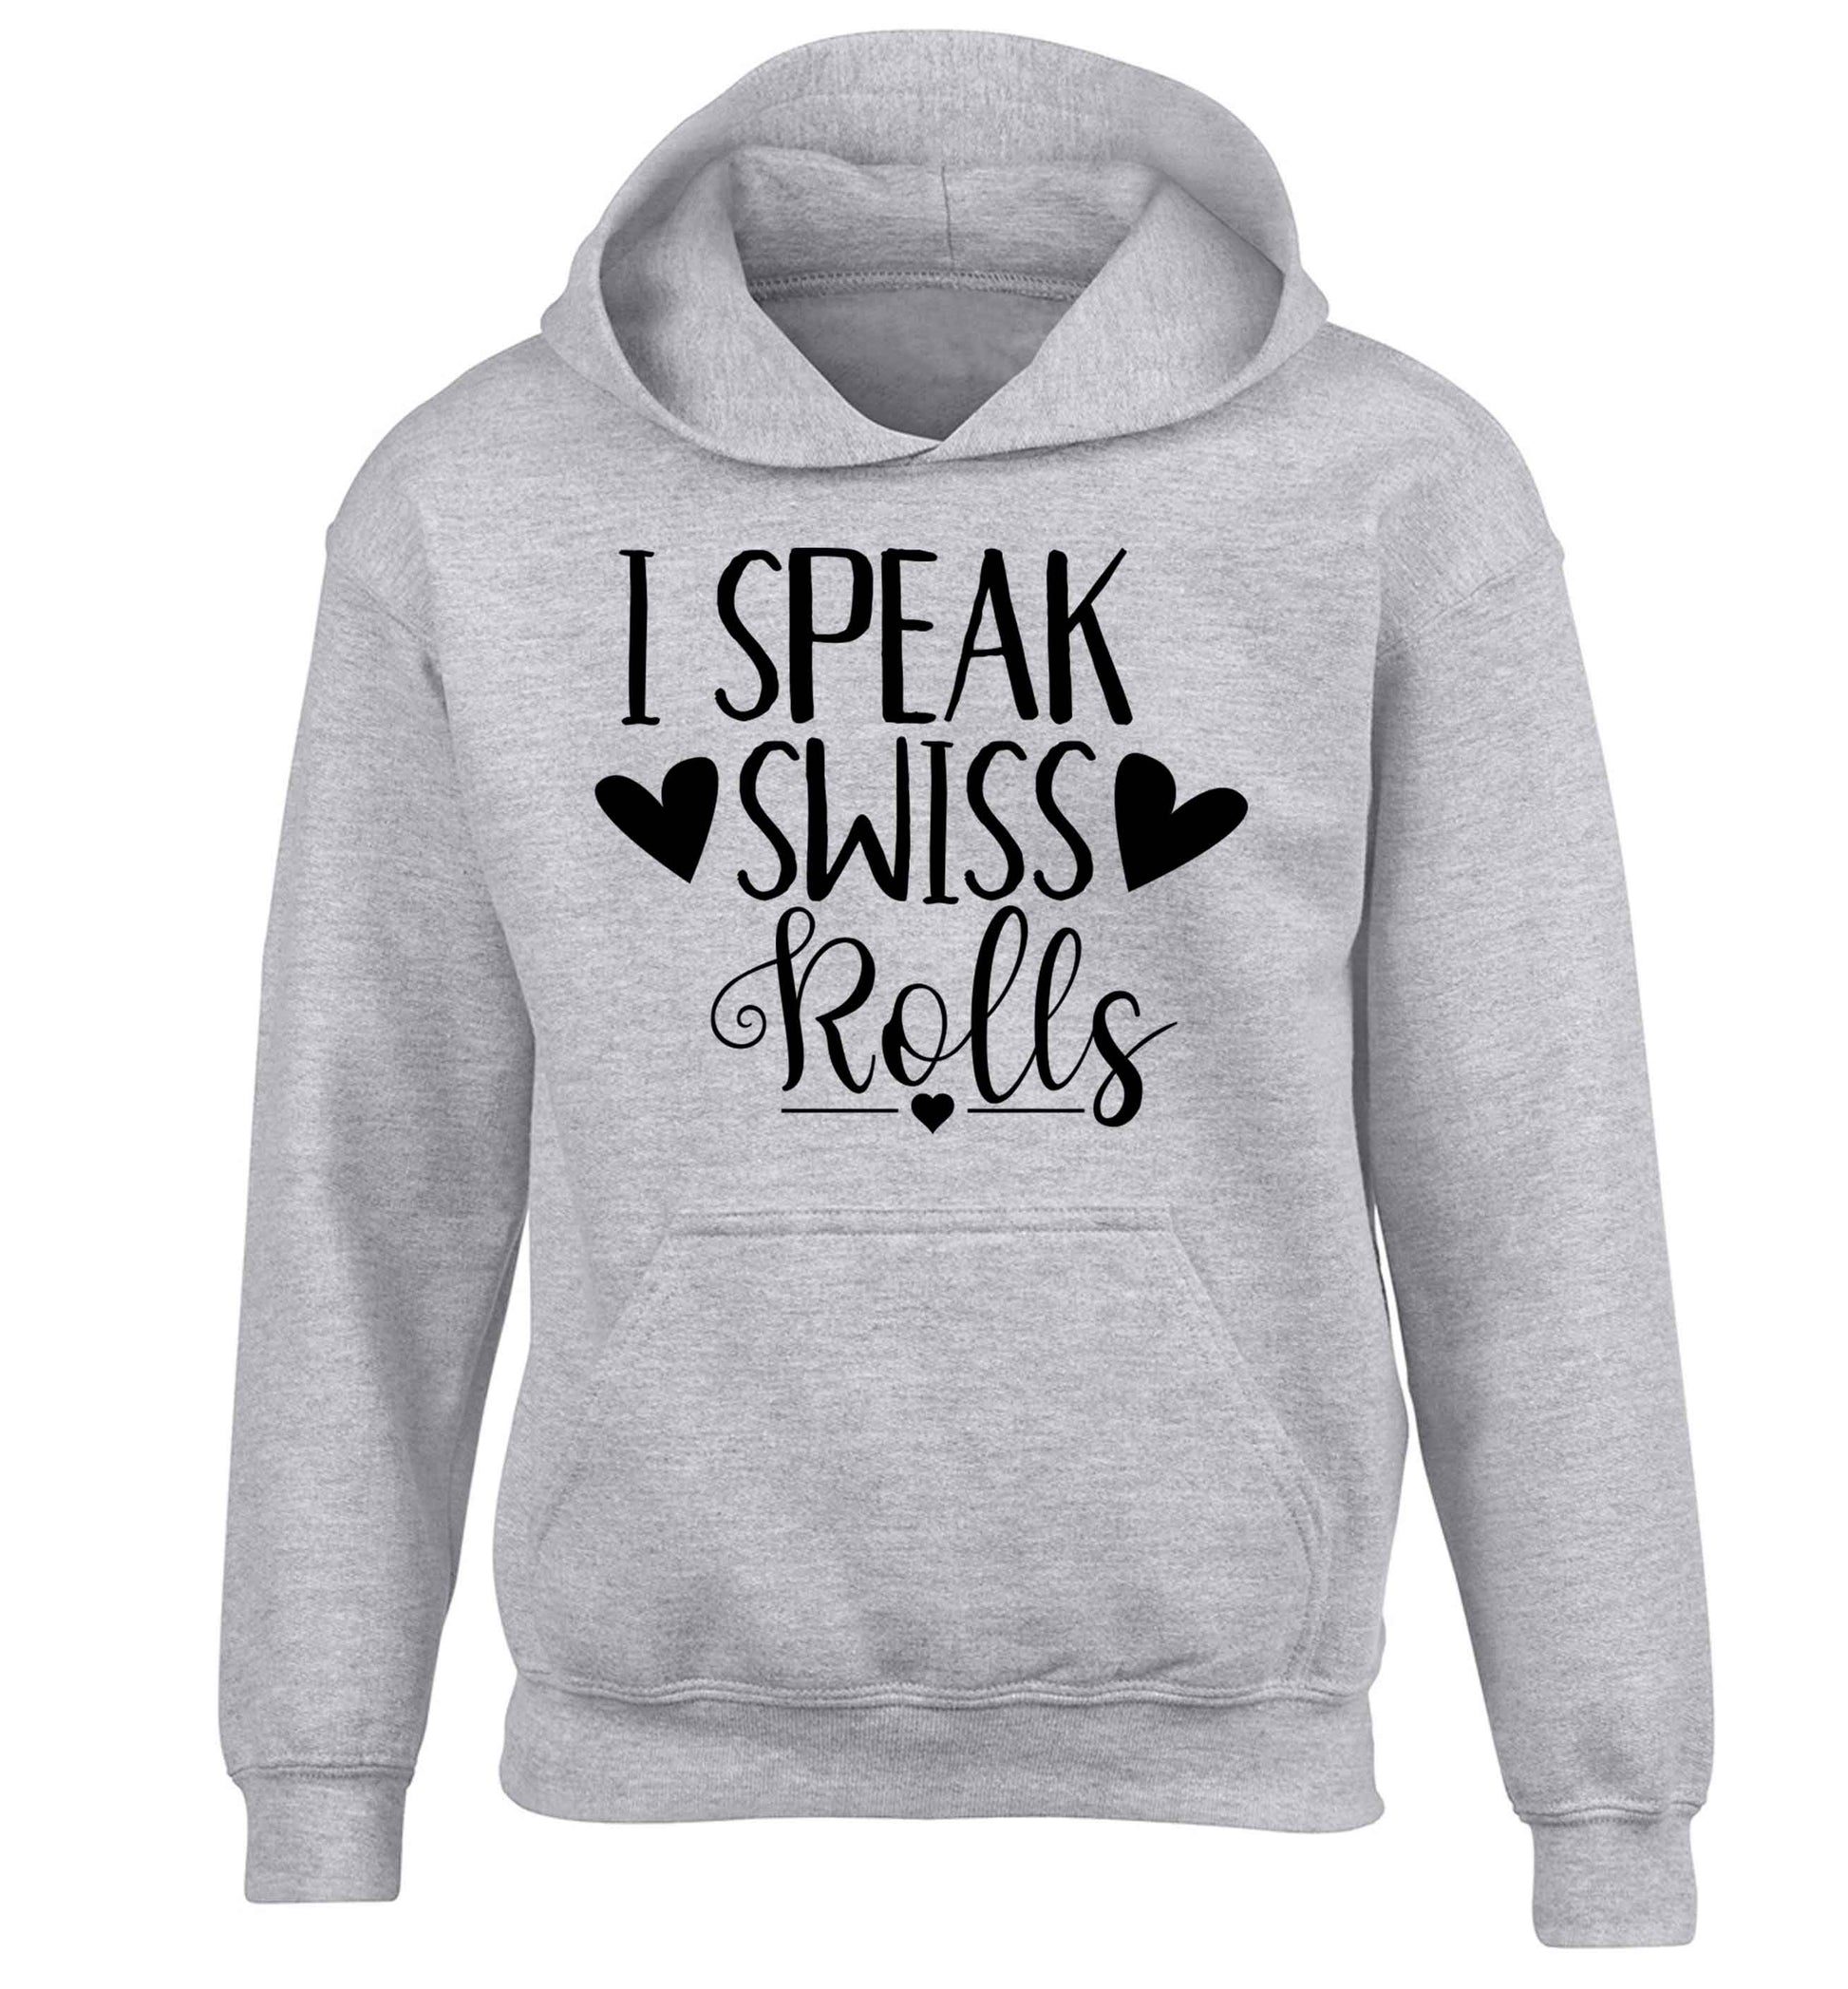 I speak swiss..rolls children's grey hoodie 12-13 Years